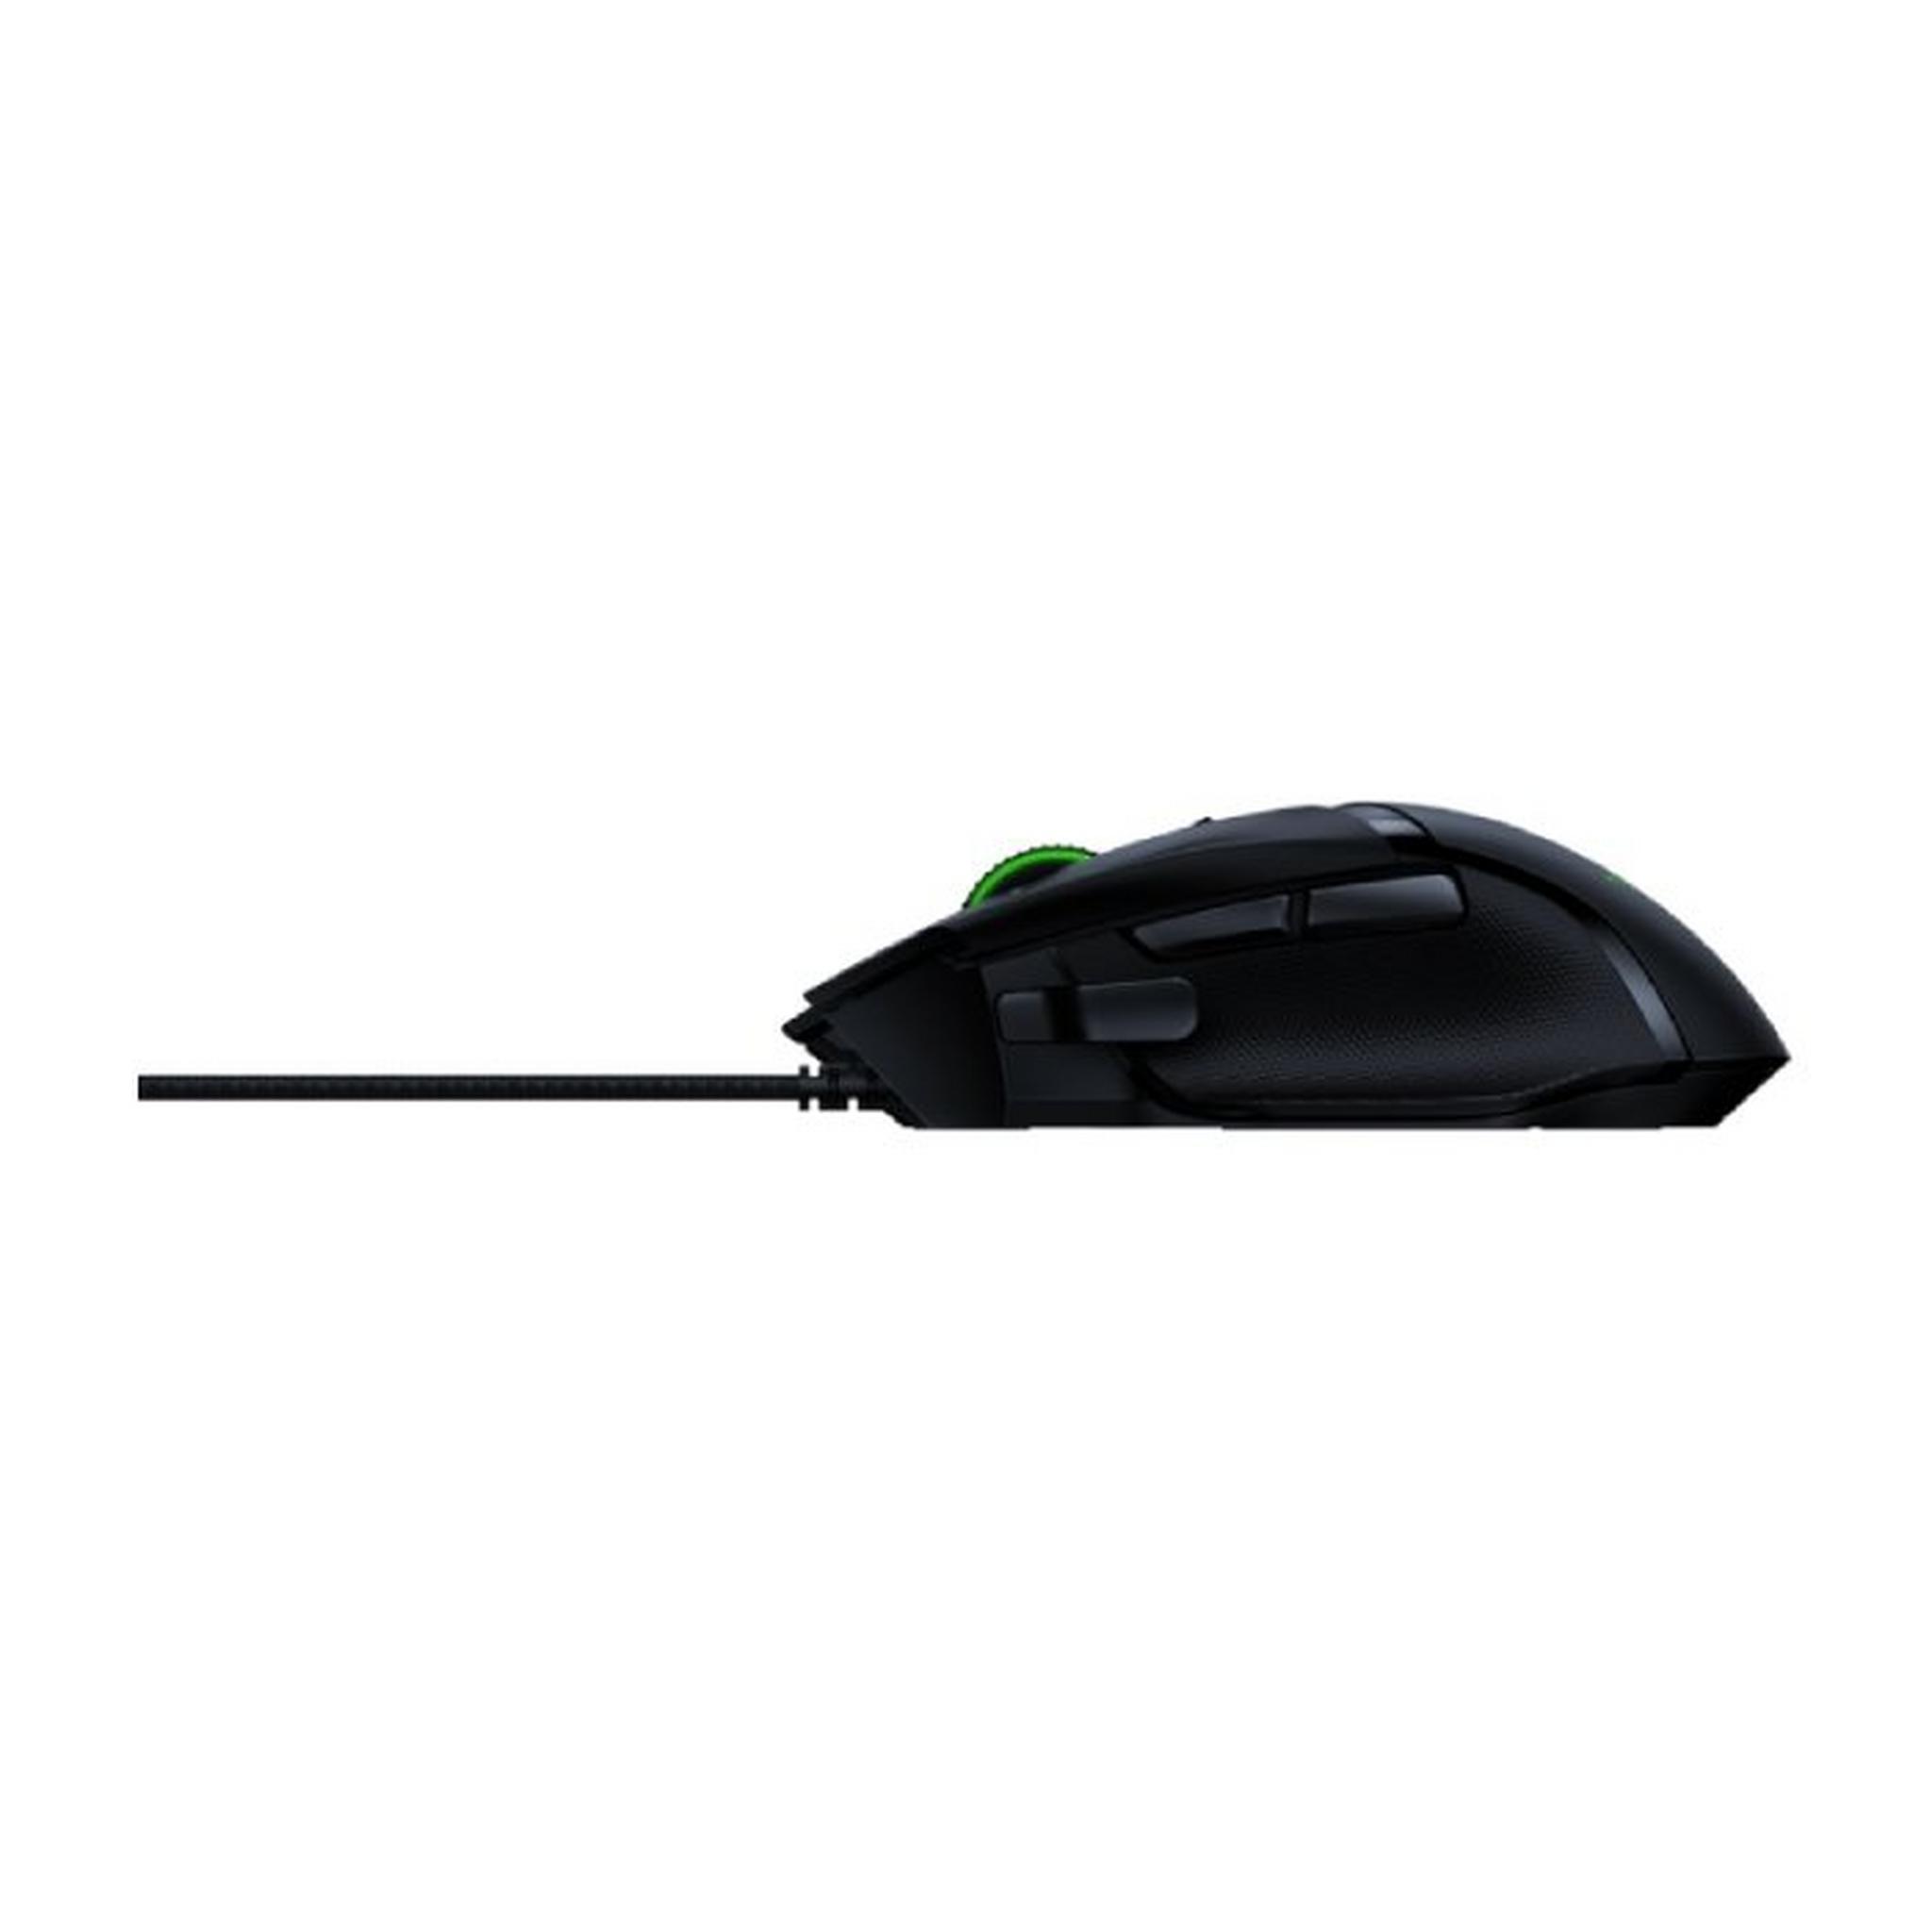 Razer Basilisk V2 Wired Gaming Mouse - Black